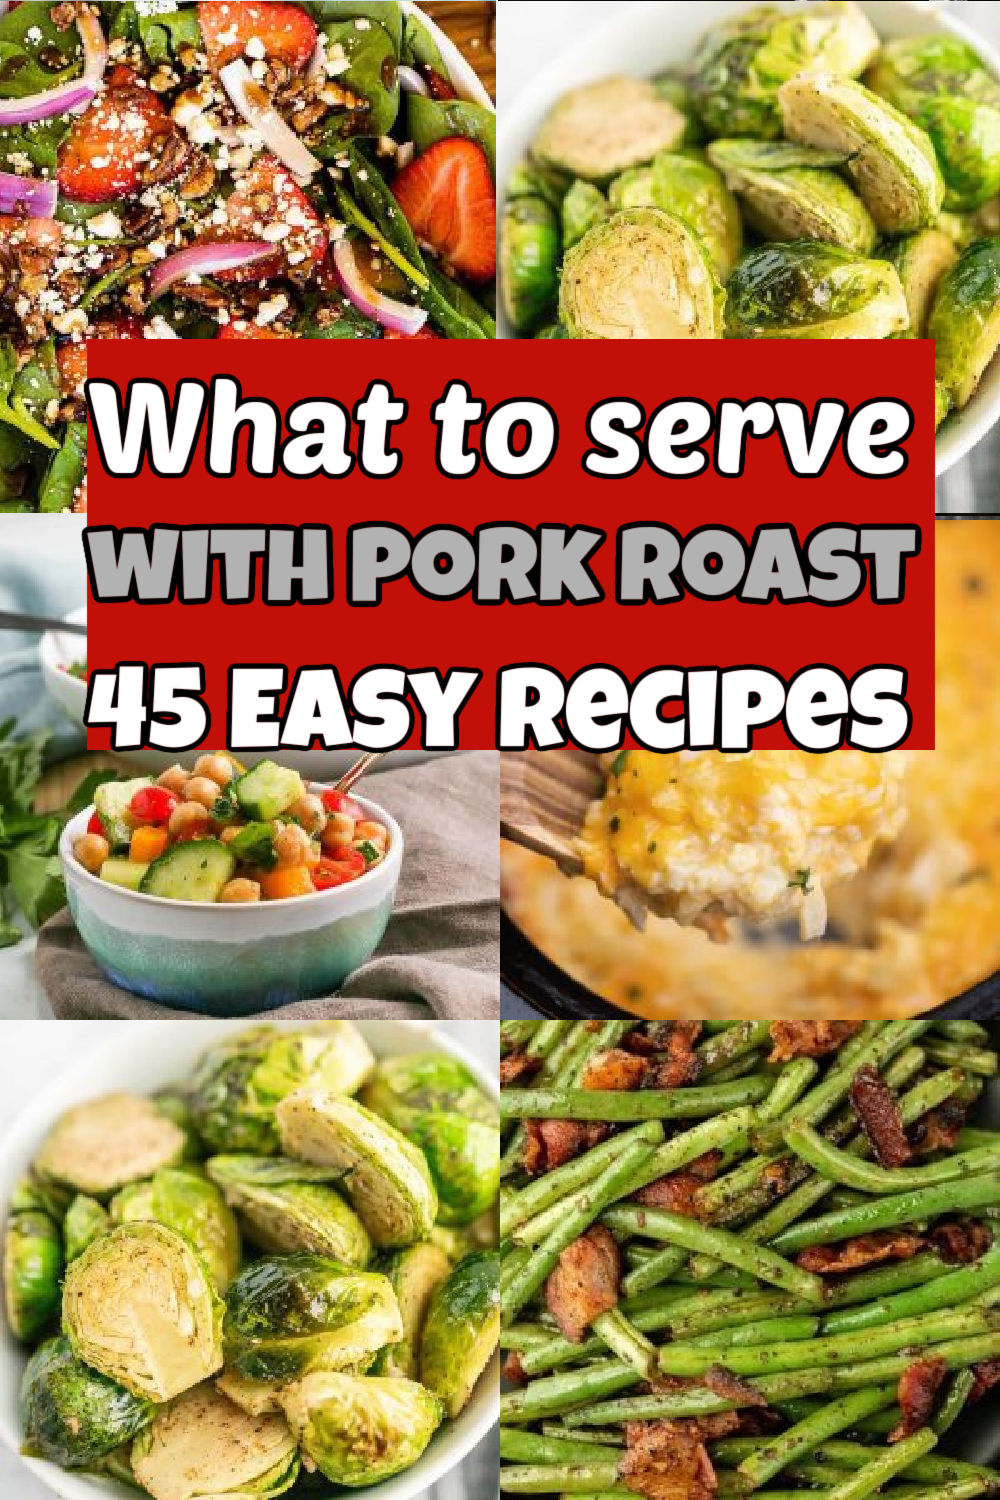 Serve with pork roast